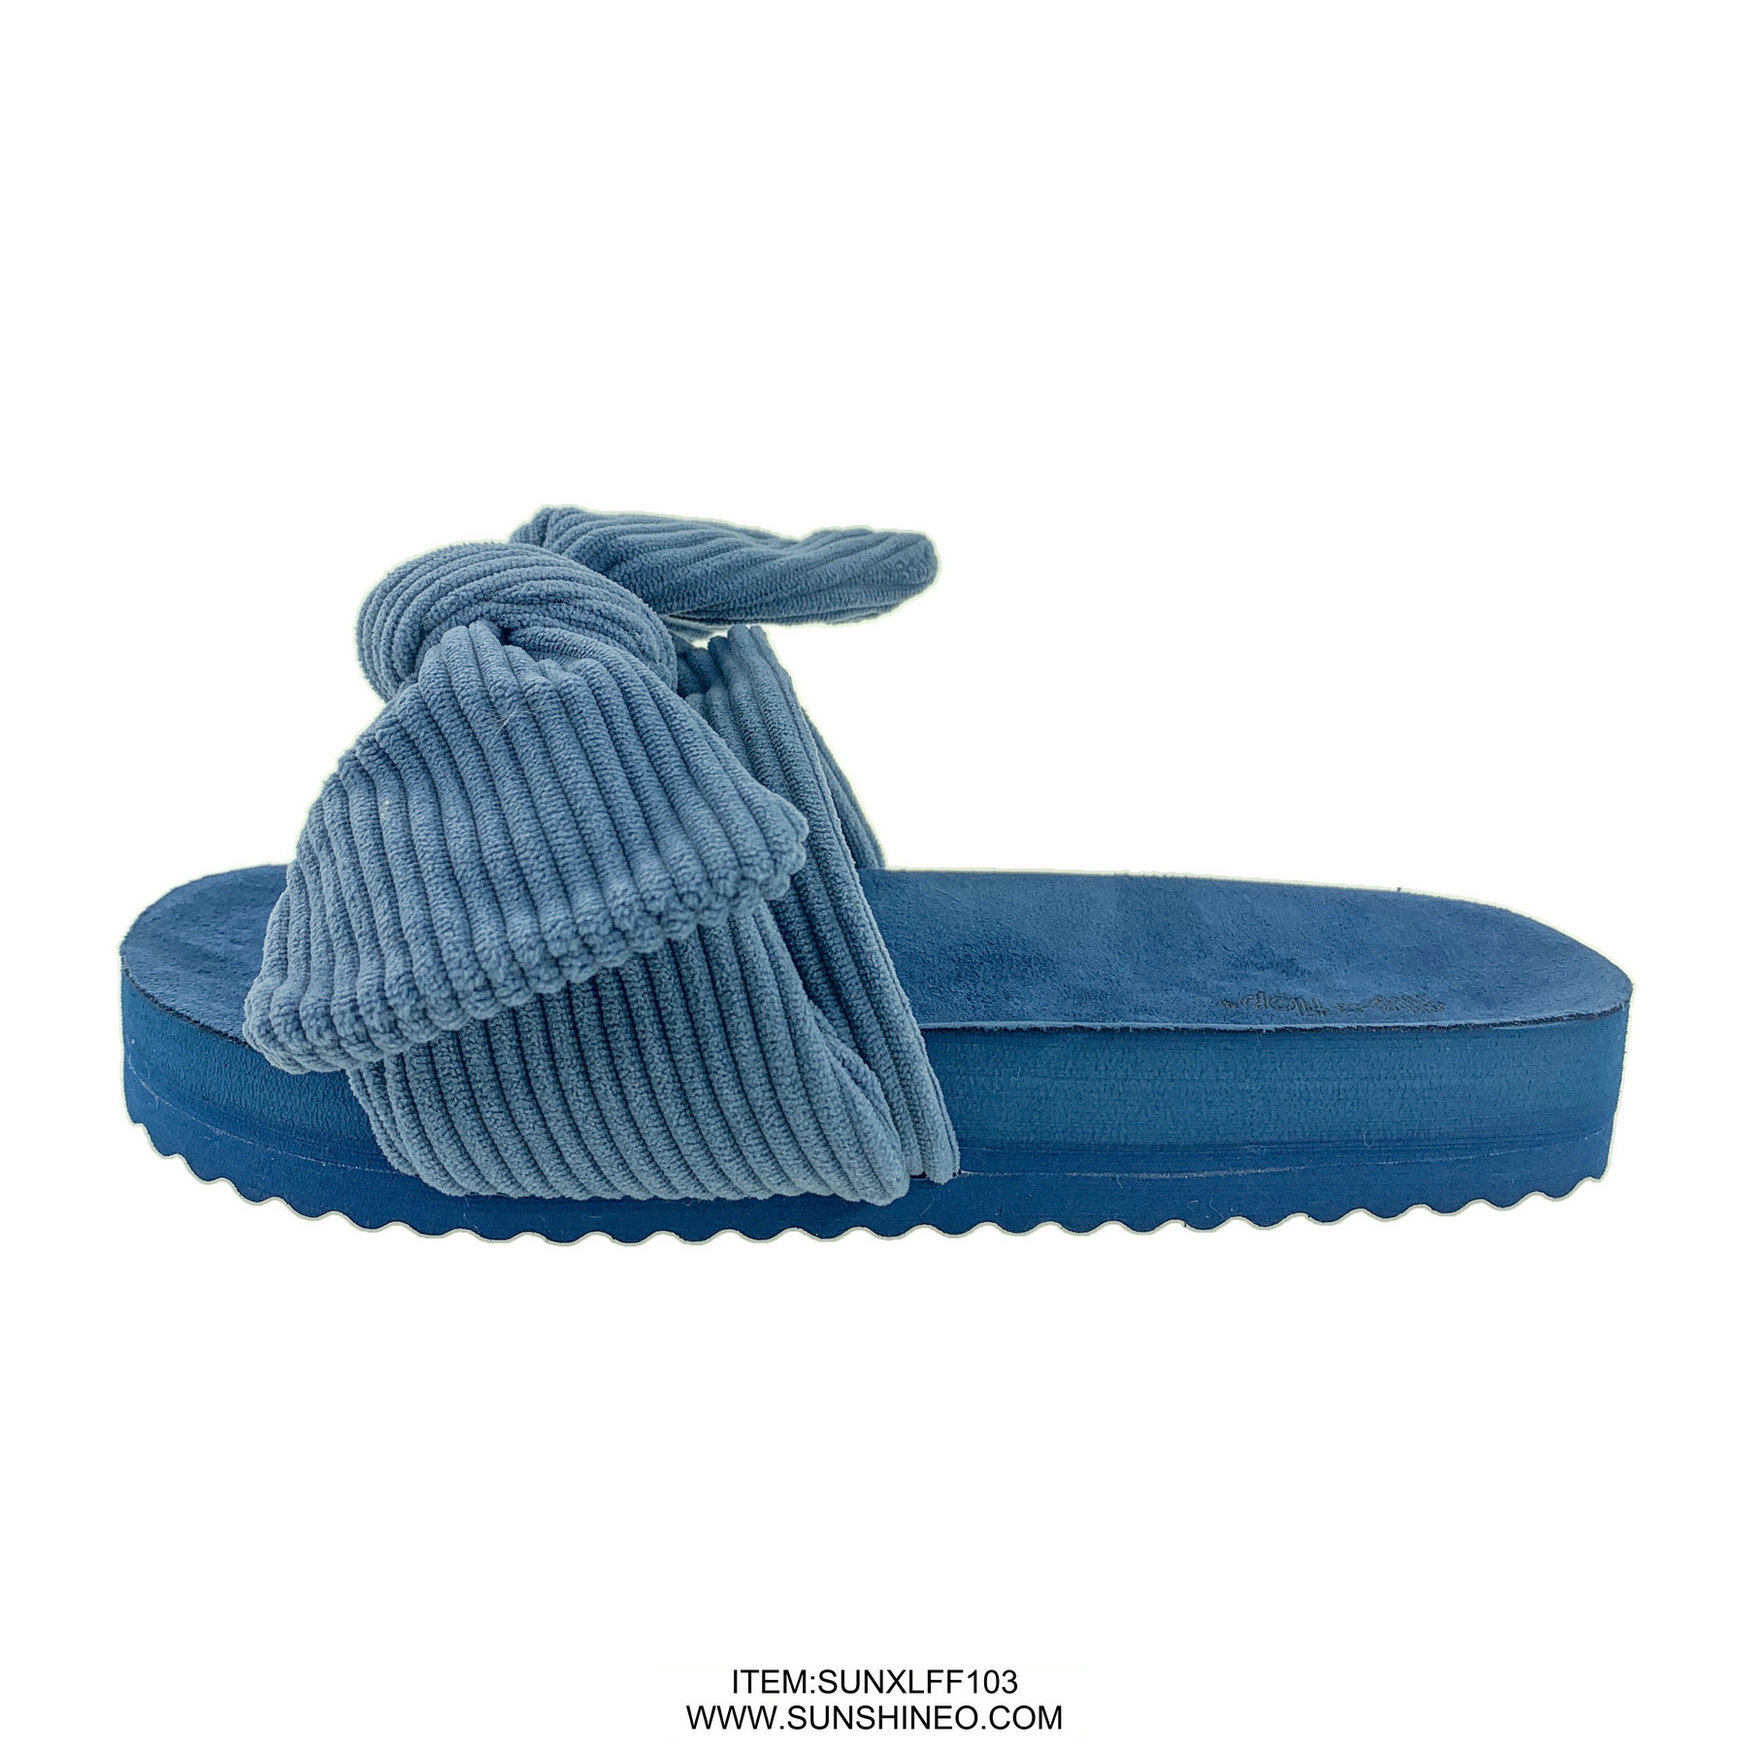 SUNXLFF103 fur flip flop sandals winter slippers